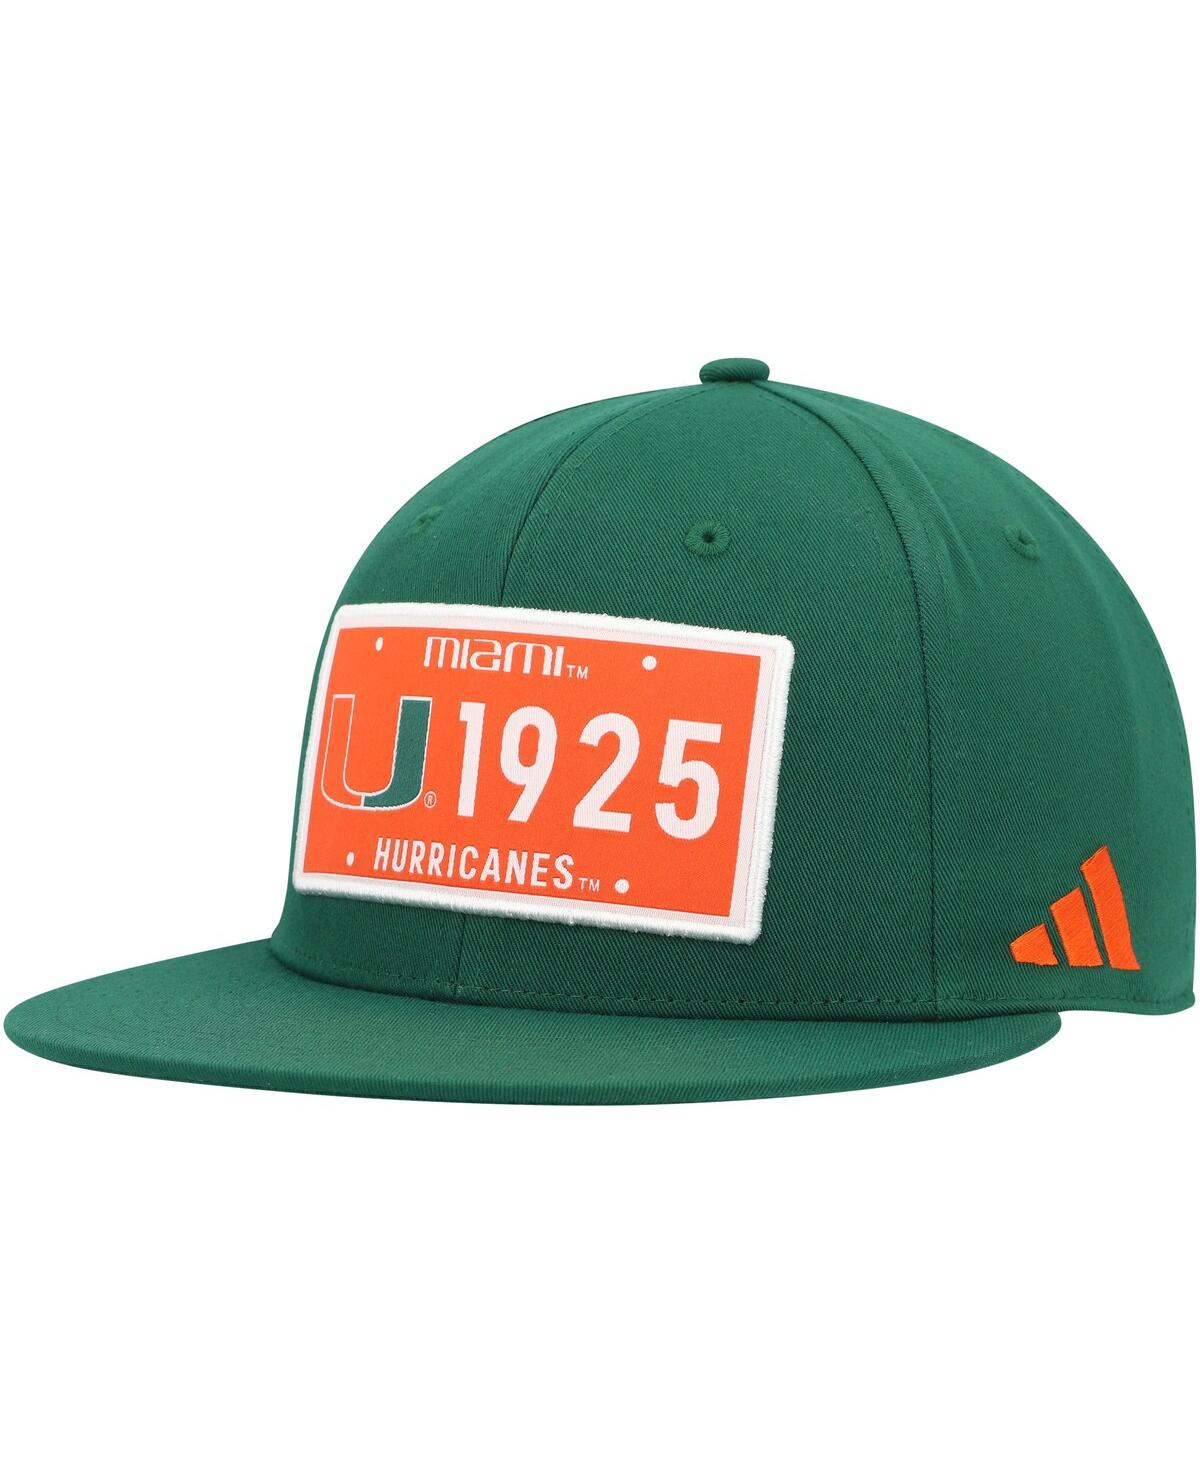 Shop Adidas Originals Men's Adidas Green Miami Hurricanes Established Snapback Hat